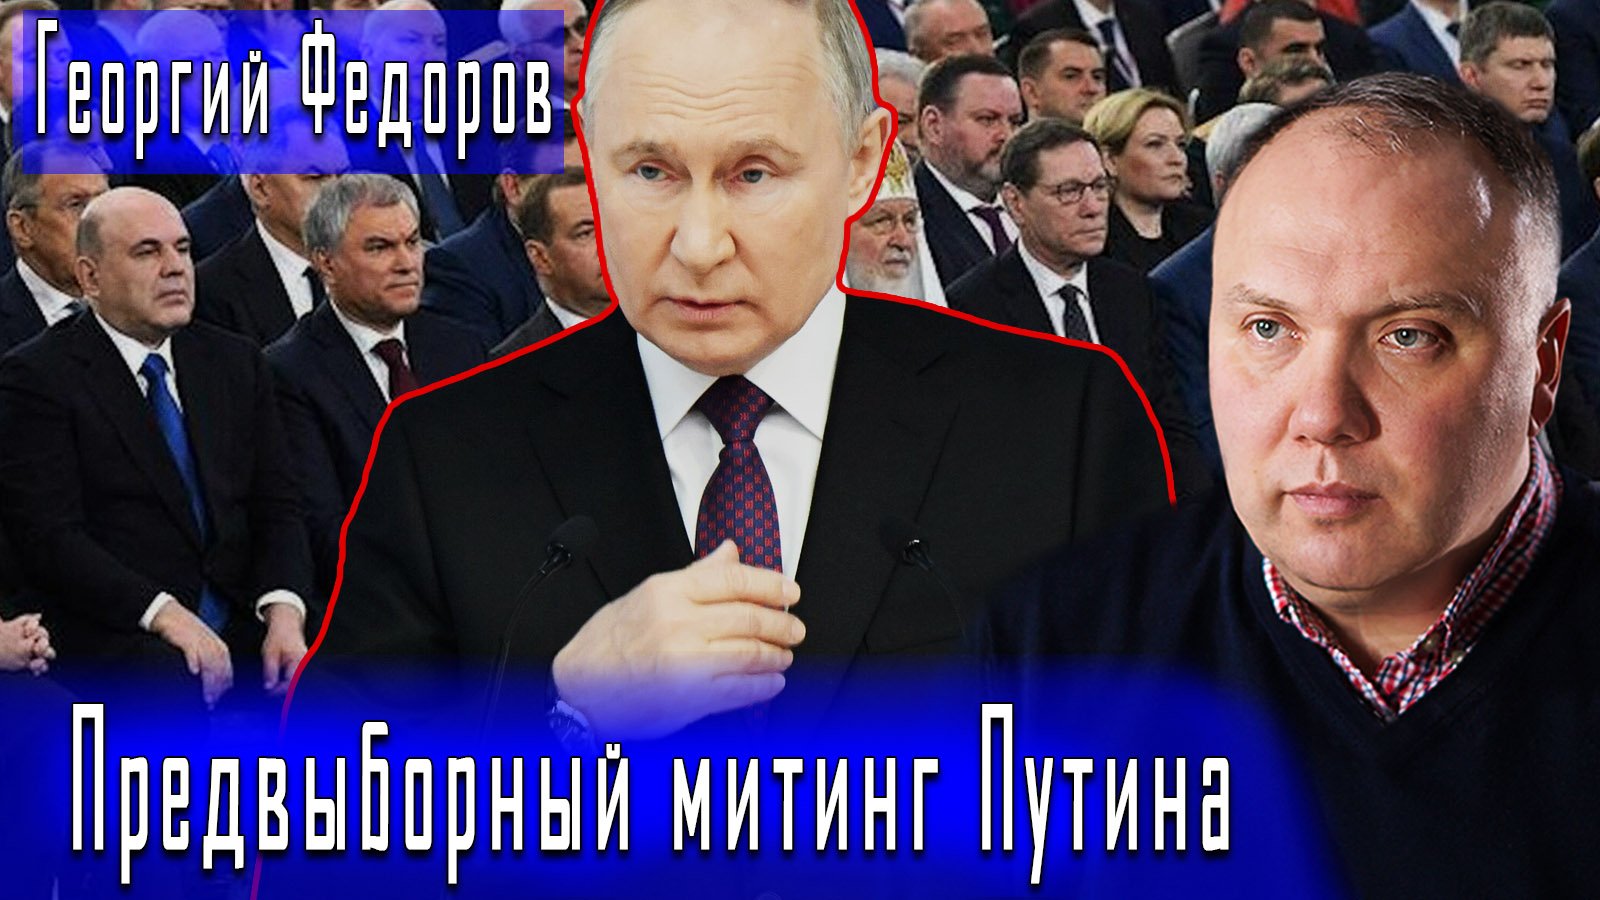 Предвыборный митинг Путина #ГеоргийФедоров #ДмитрийДанилов